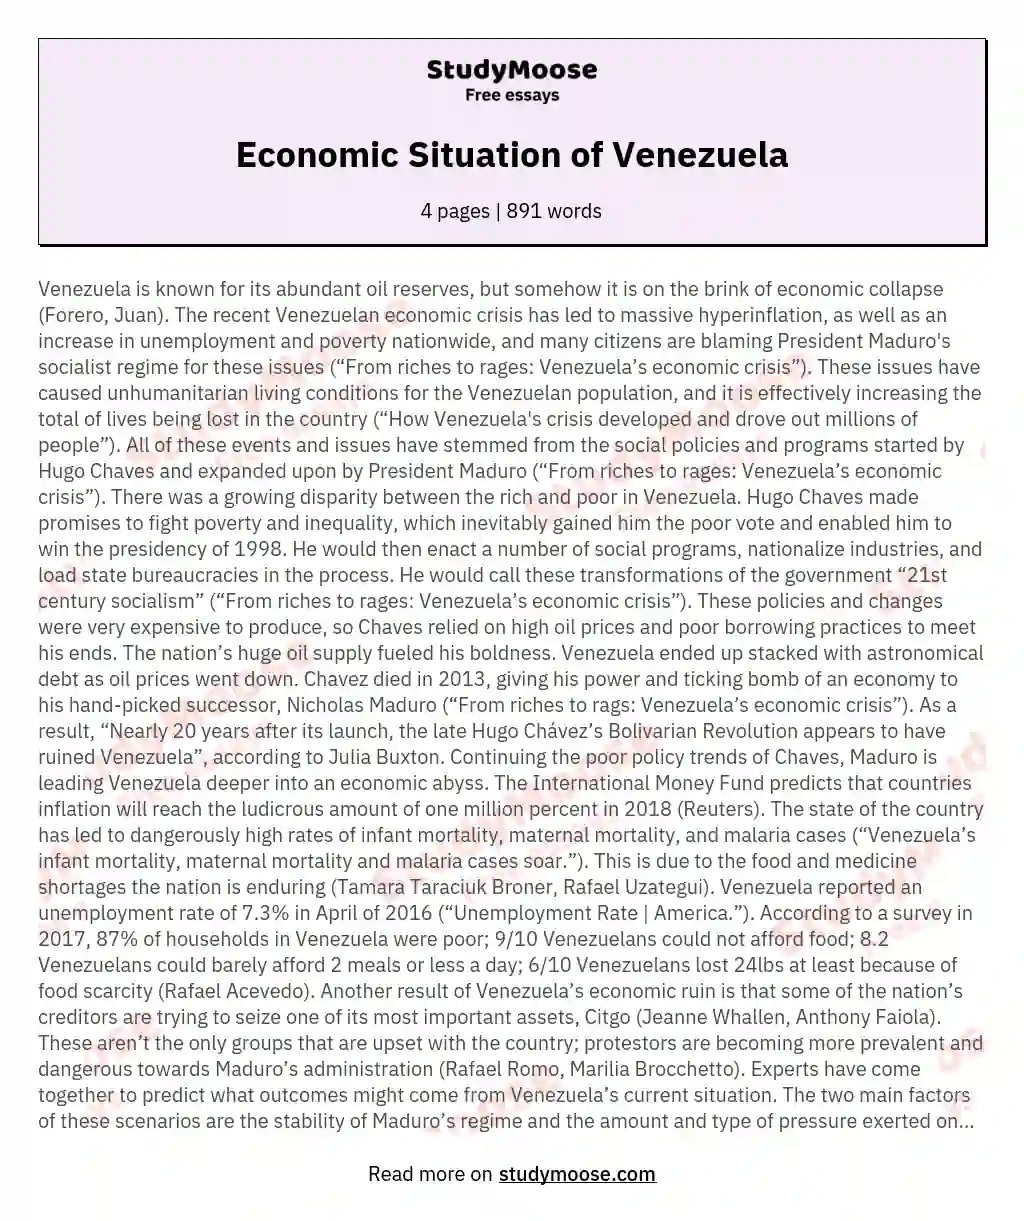 Economic Situation of Venezuela essay